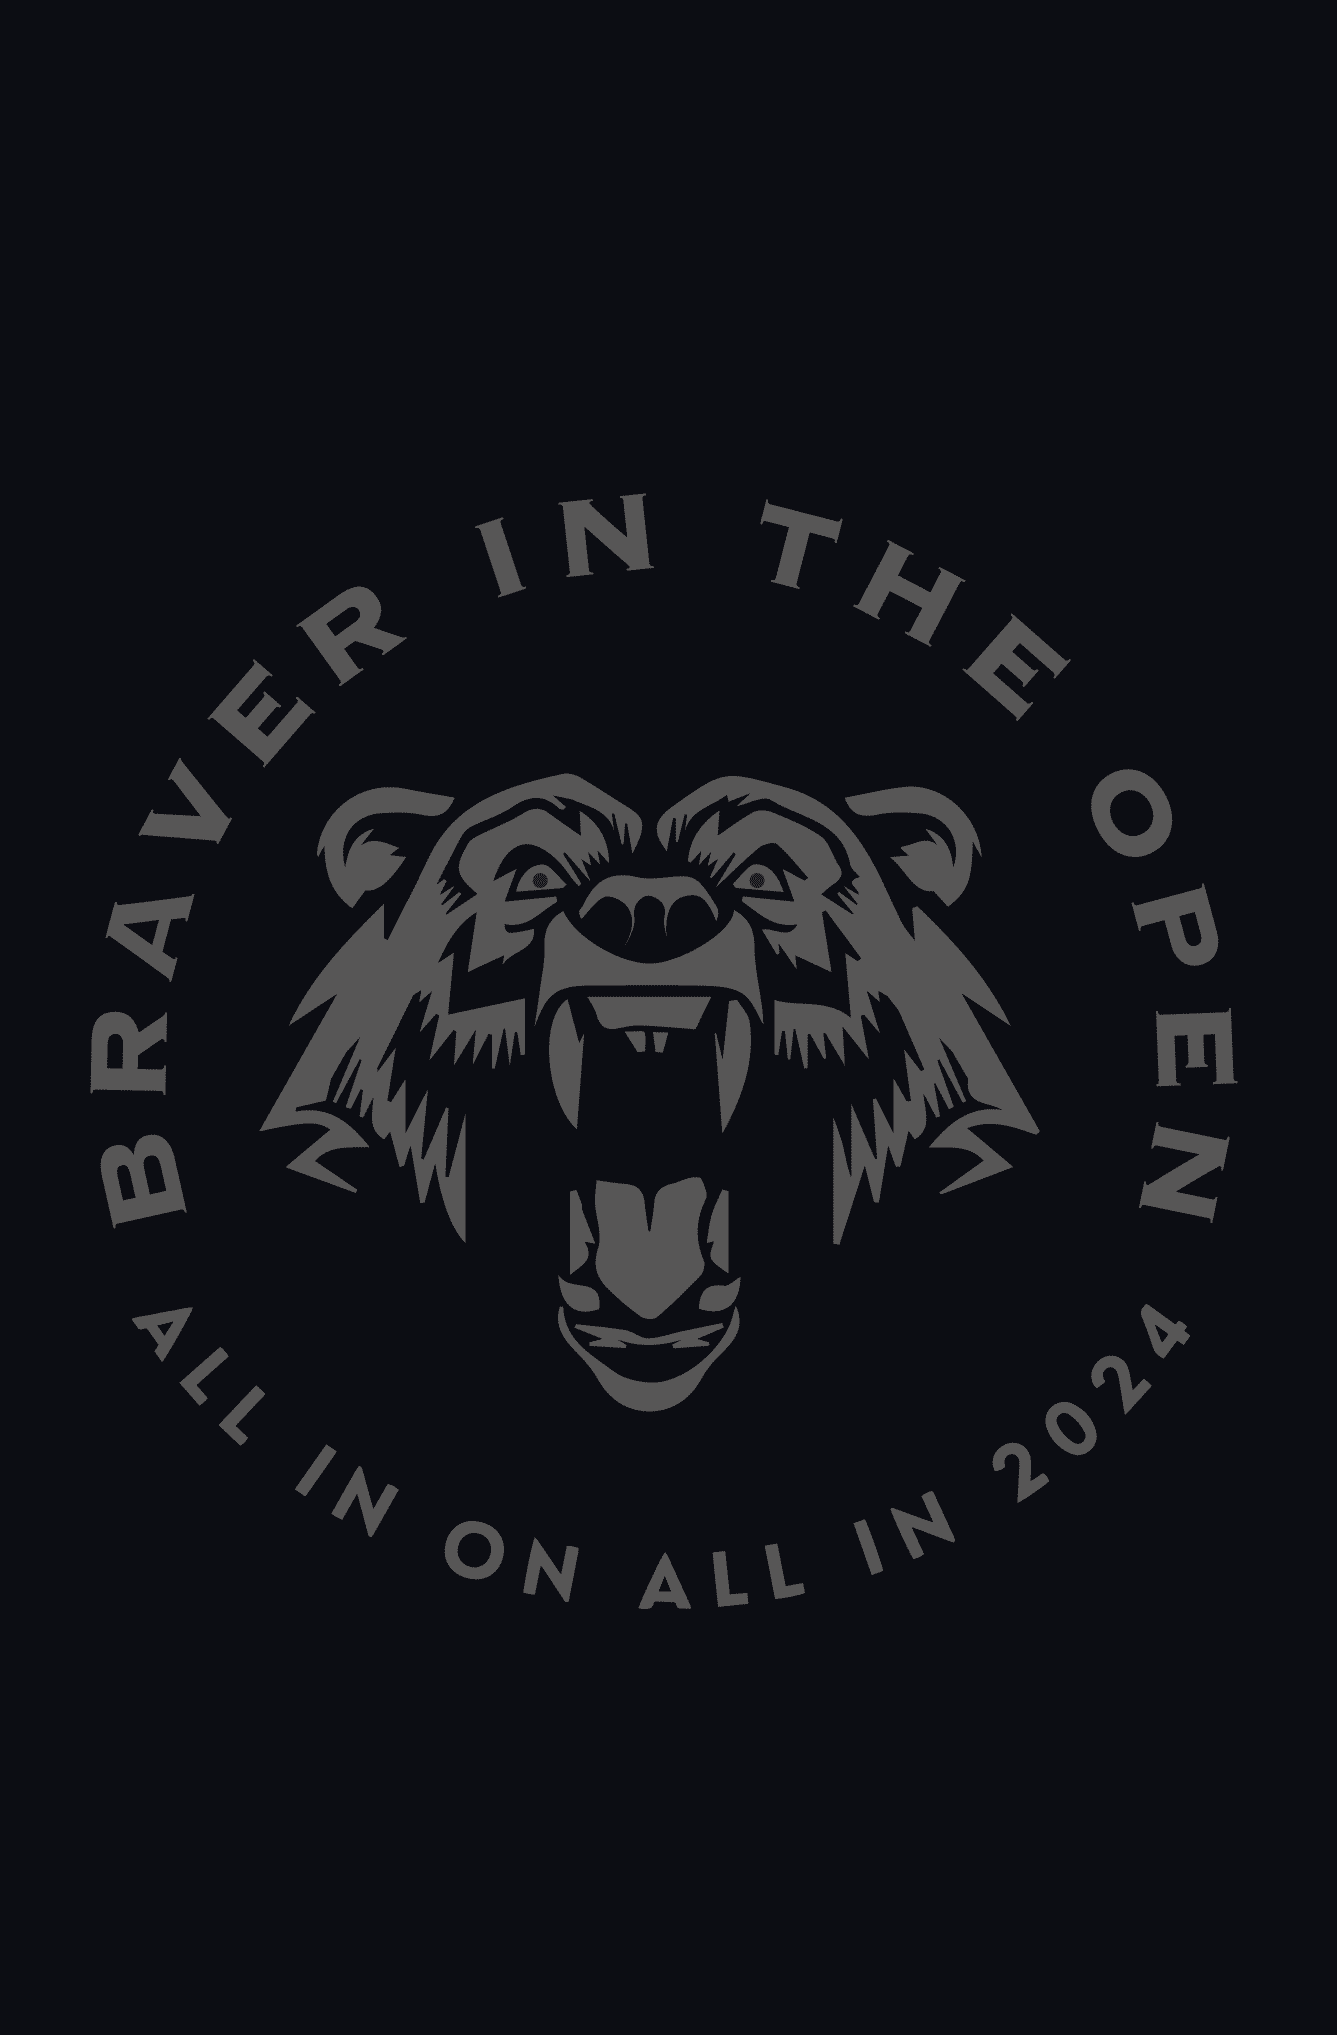 Braver in the open 2024 design on black background